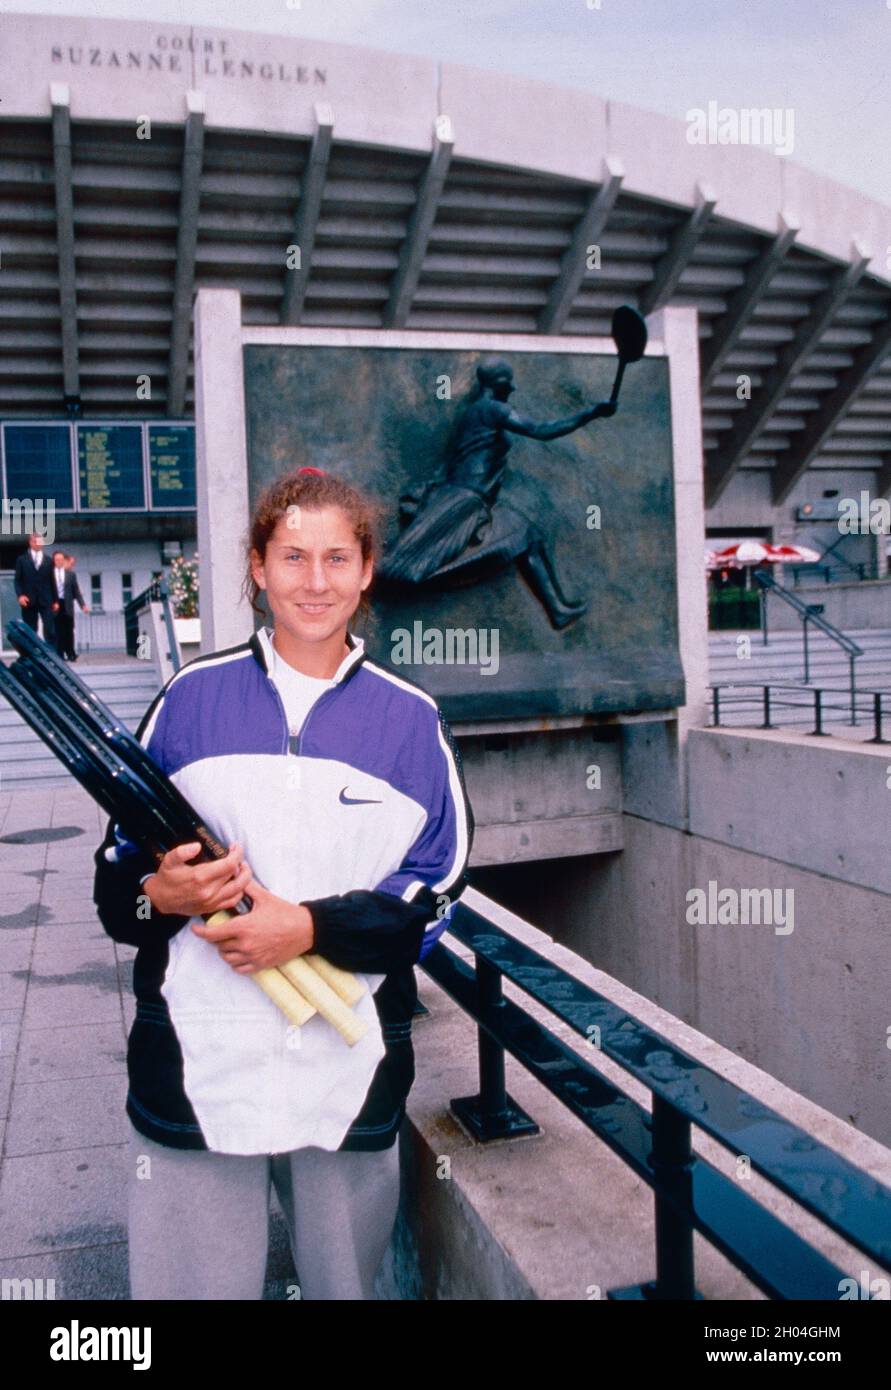 Unidentified tennis player women's single outside the Suzanne Lenglen Stadium, Roland Garros, France 2001 Stock Photo